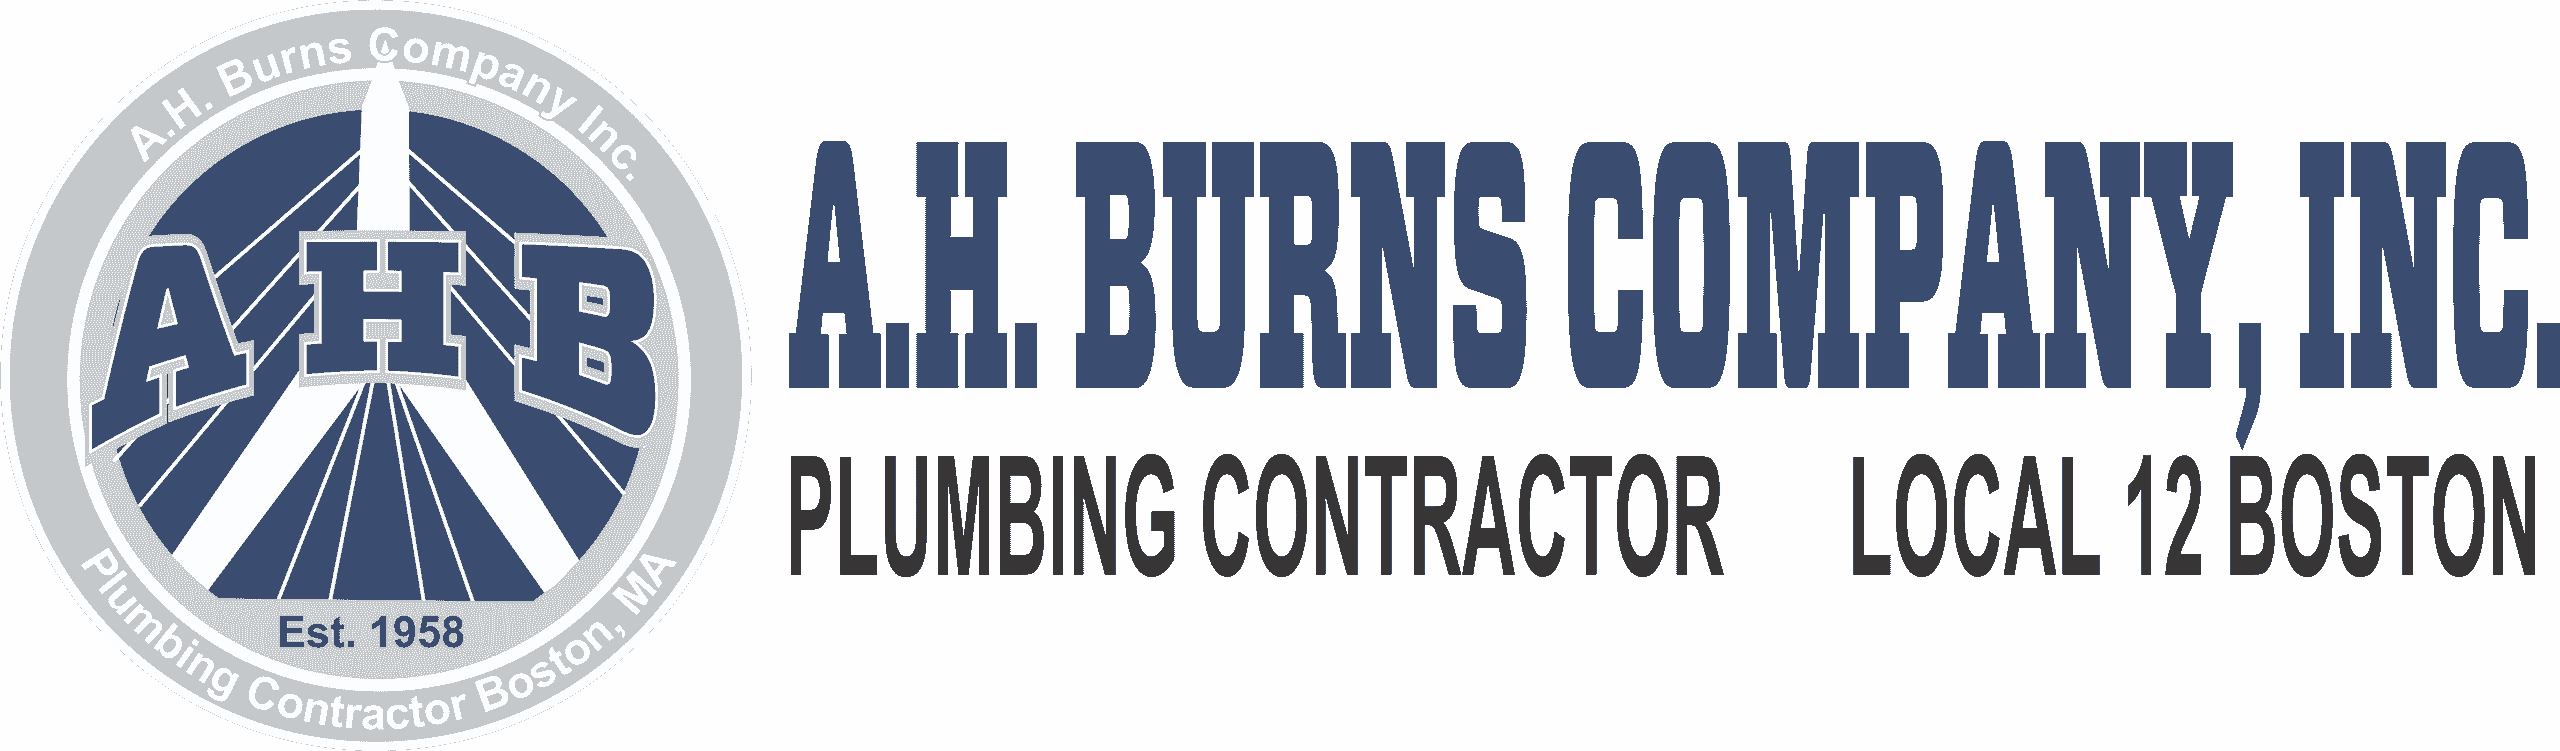 A.H. Burns Company, Inc logo Plumbing Contractor LOCAL 12 BOSTON